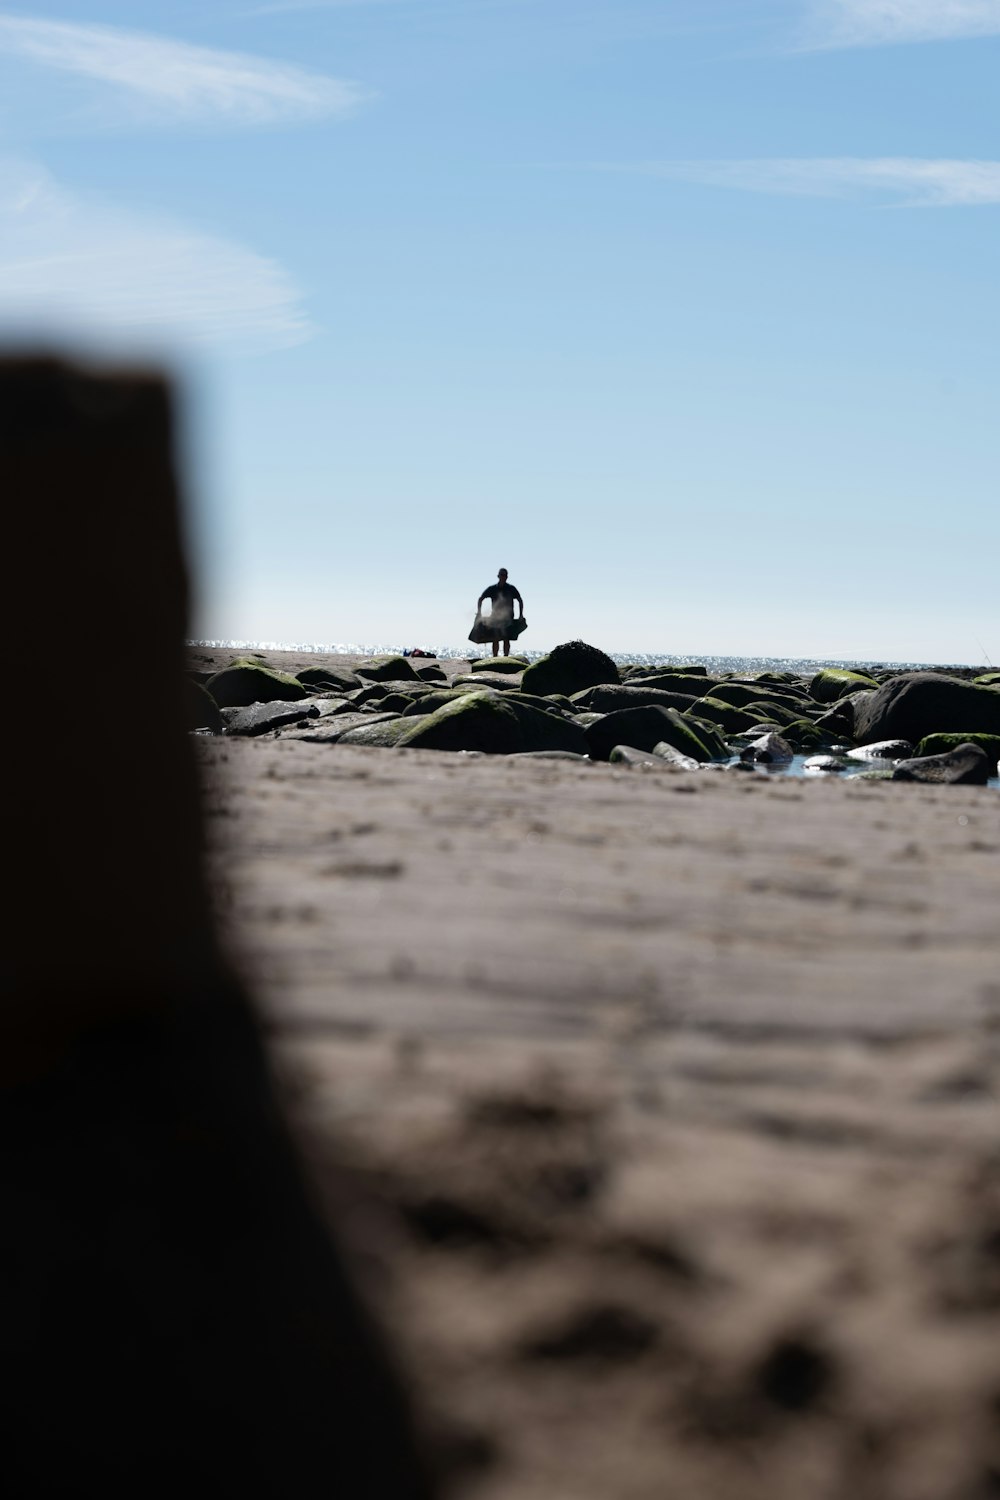 a person sitting on a beach